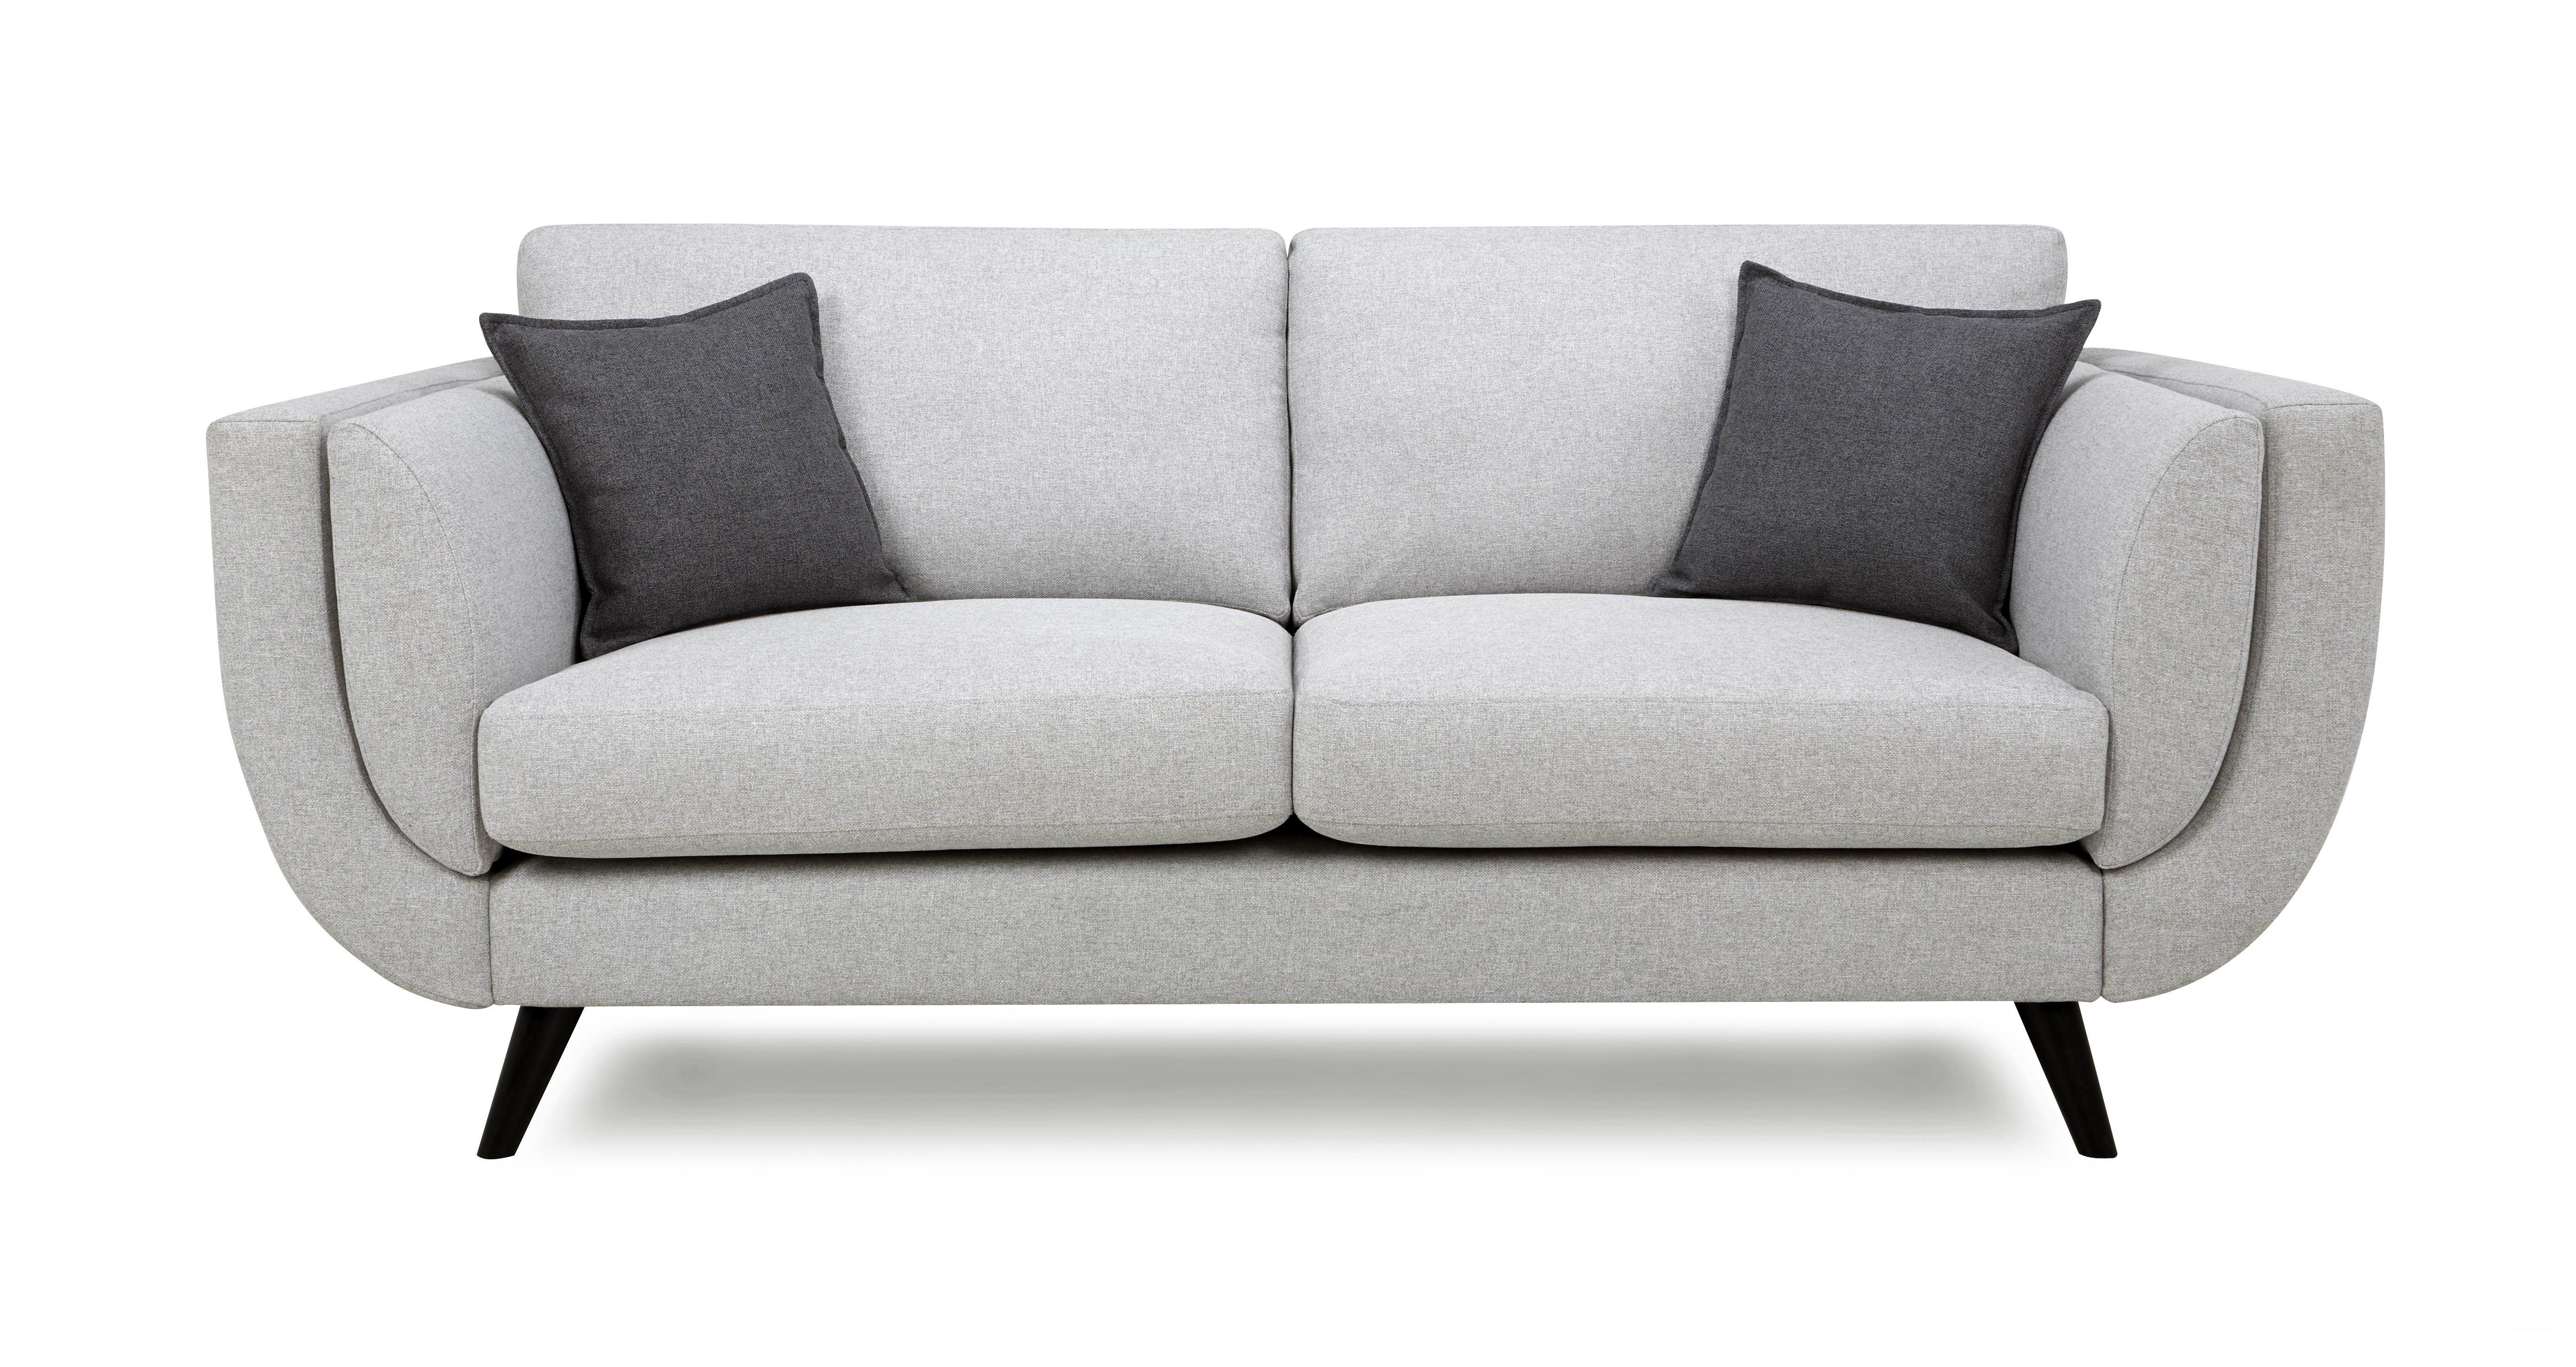 Zuri Large Sofa | DFS